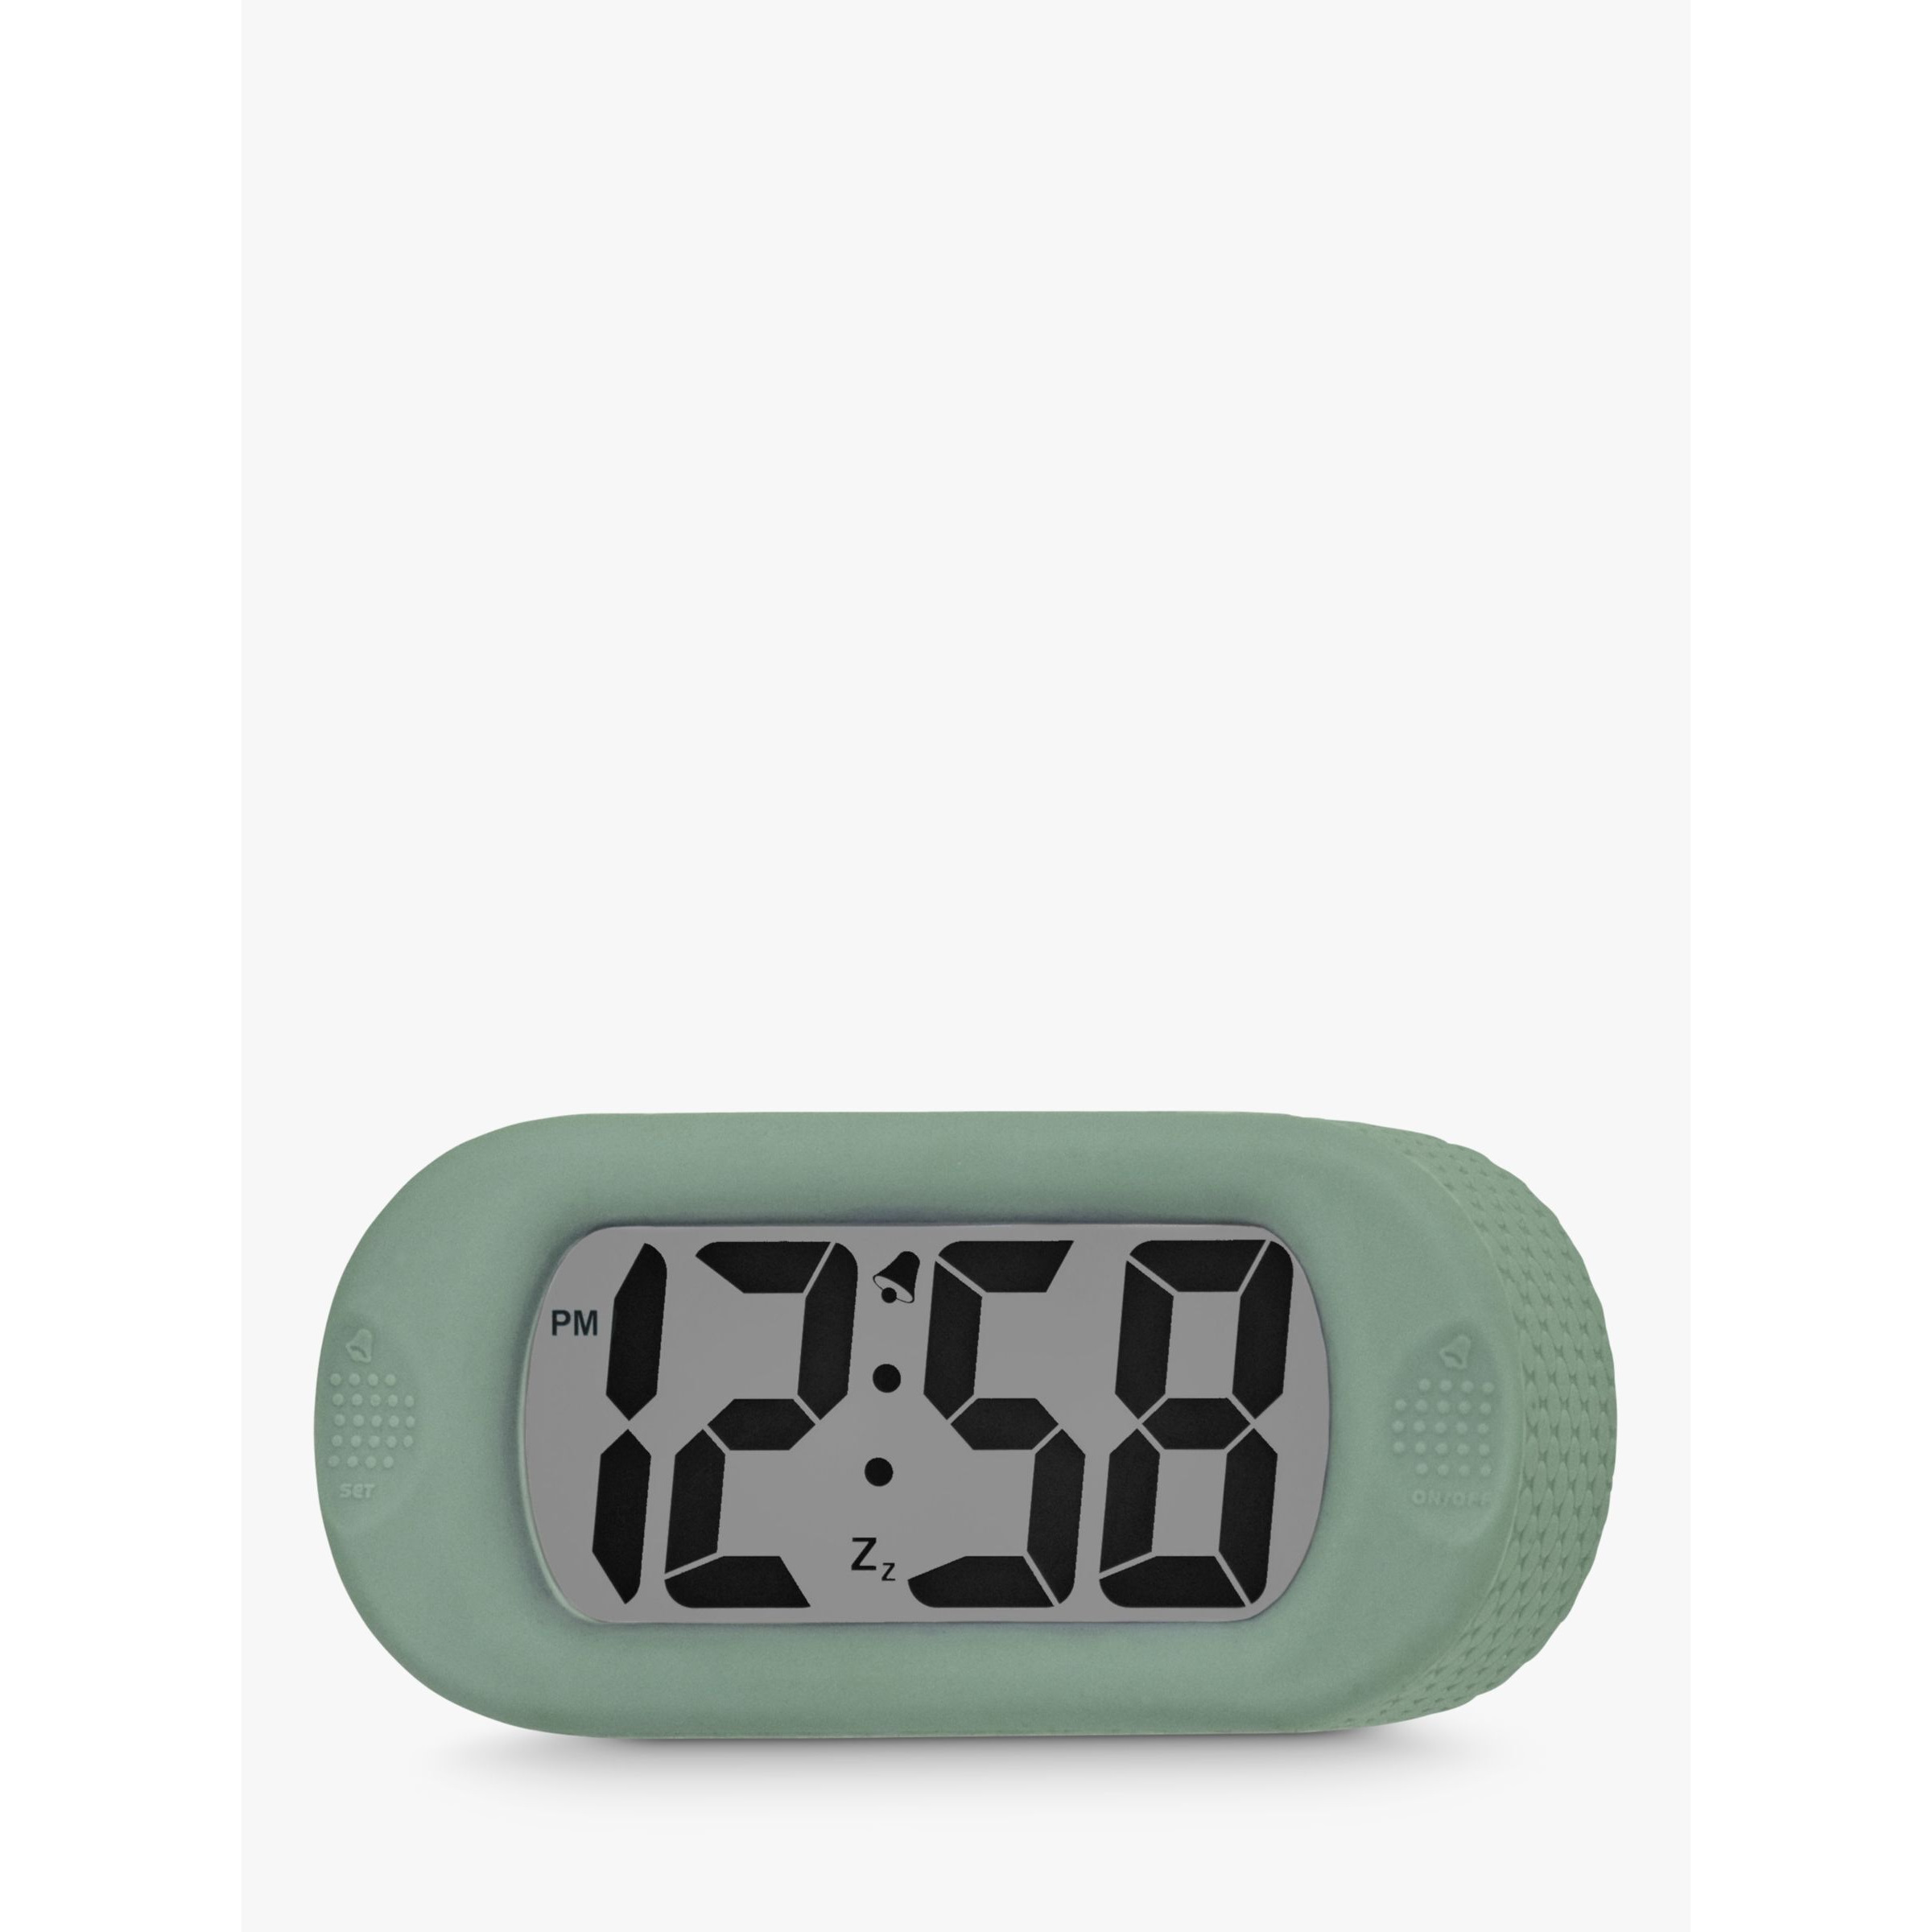 Acctim Silicone Jumbo LCD Smartlite® Digital Alarm Clock - image 1